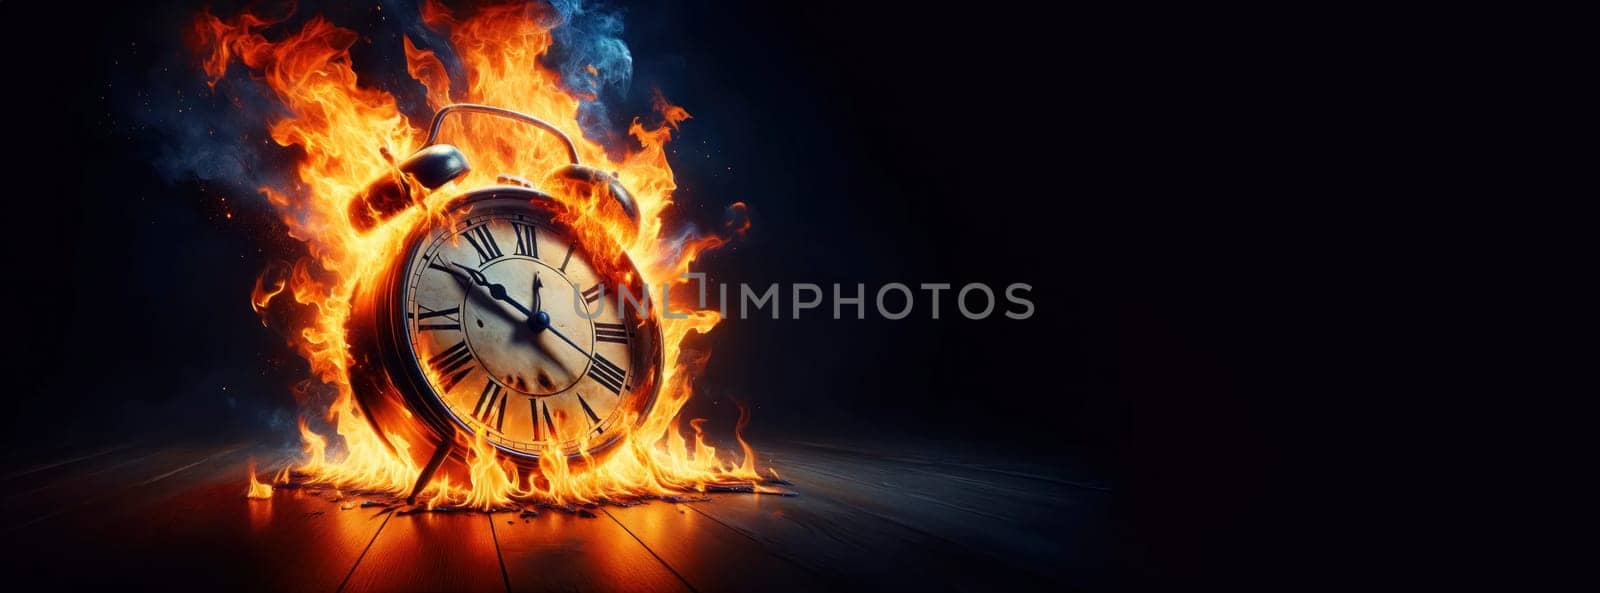 A clock dial ablaze, symbolizing time's ephemeral essence